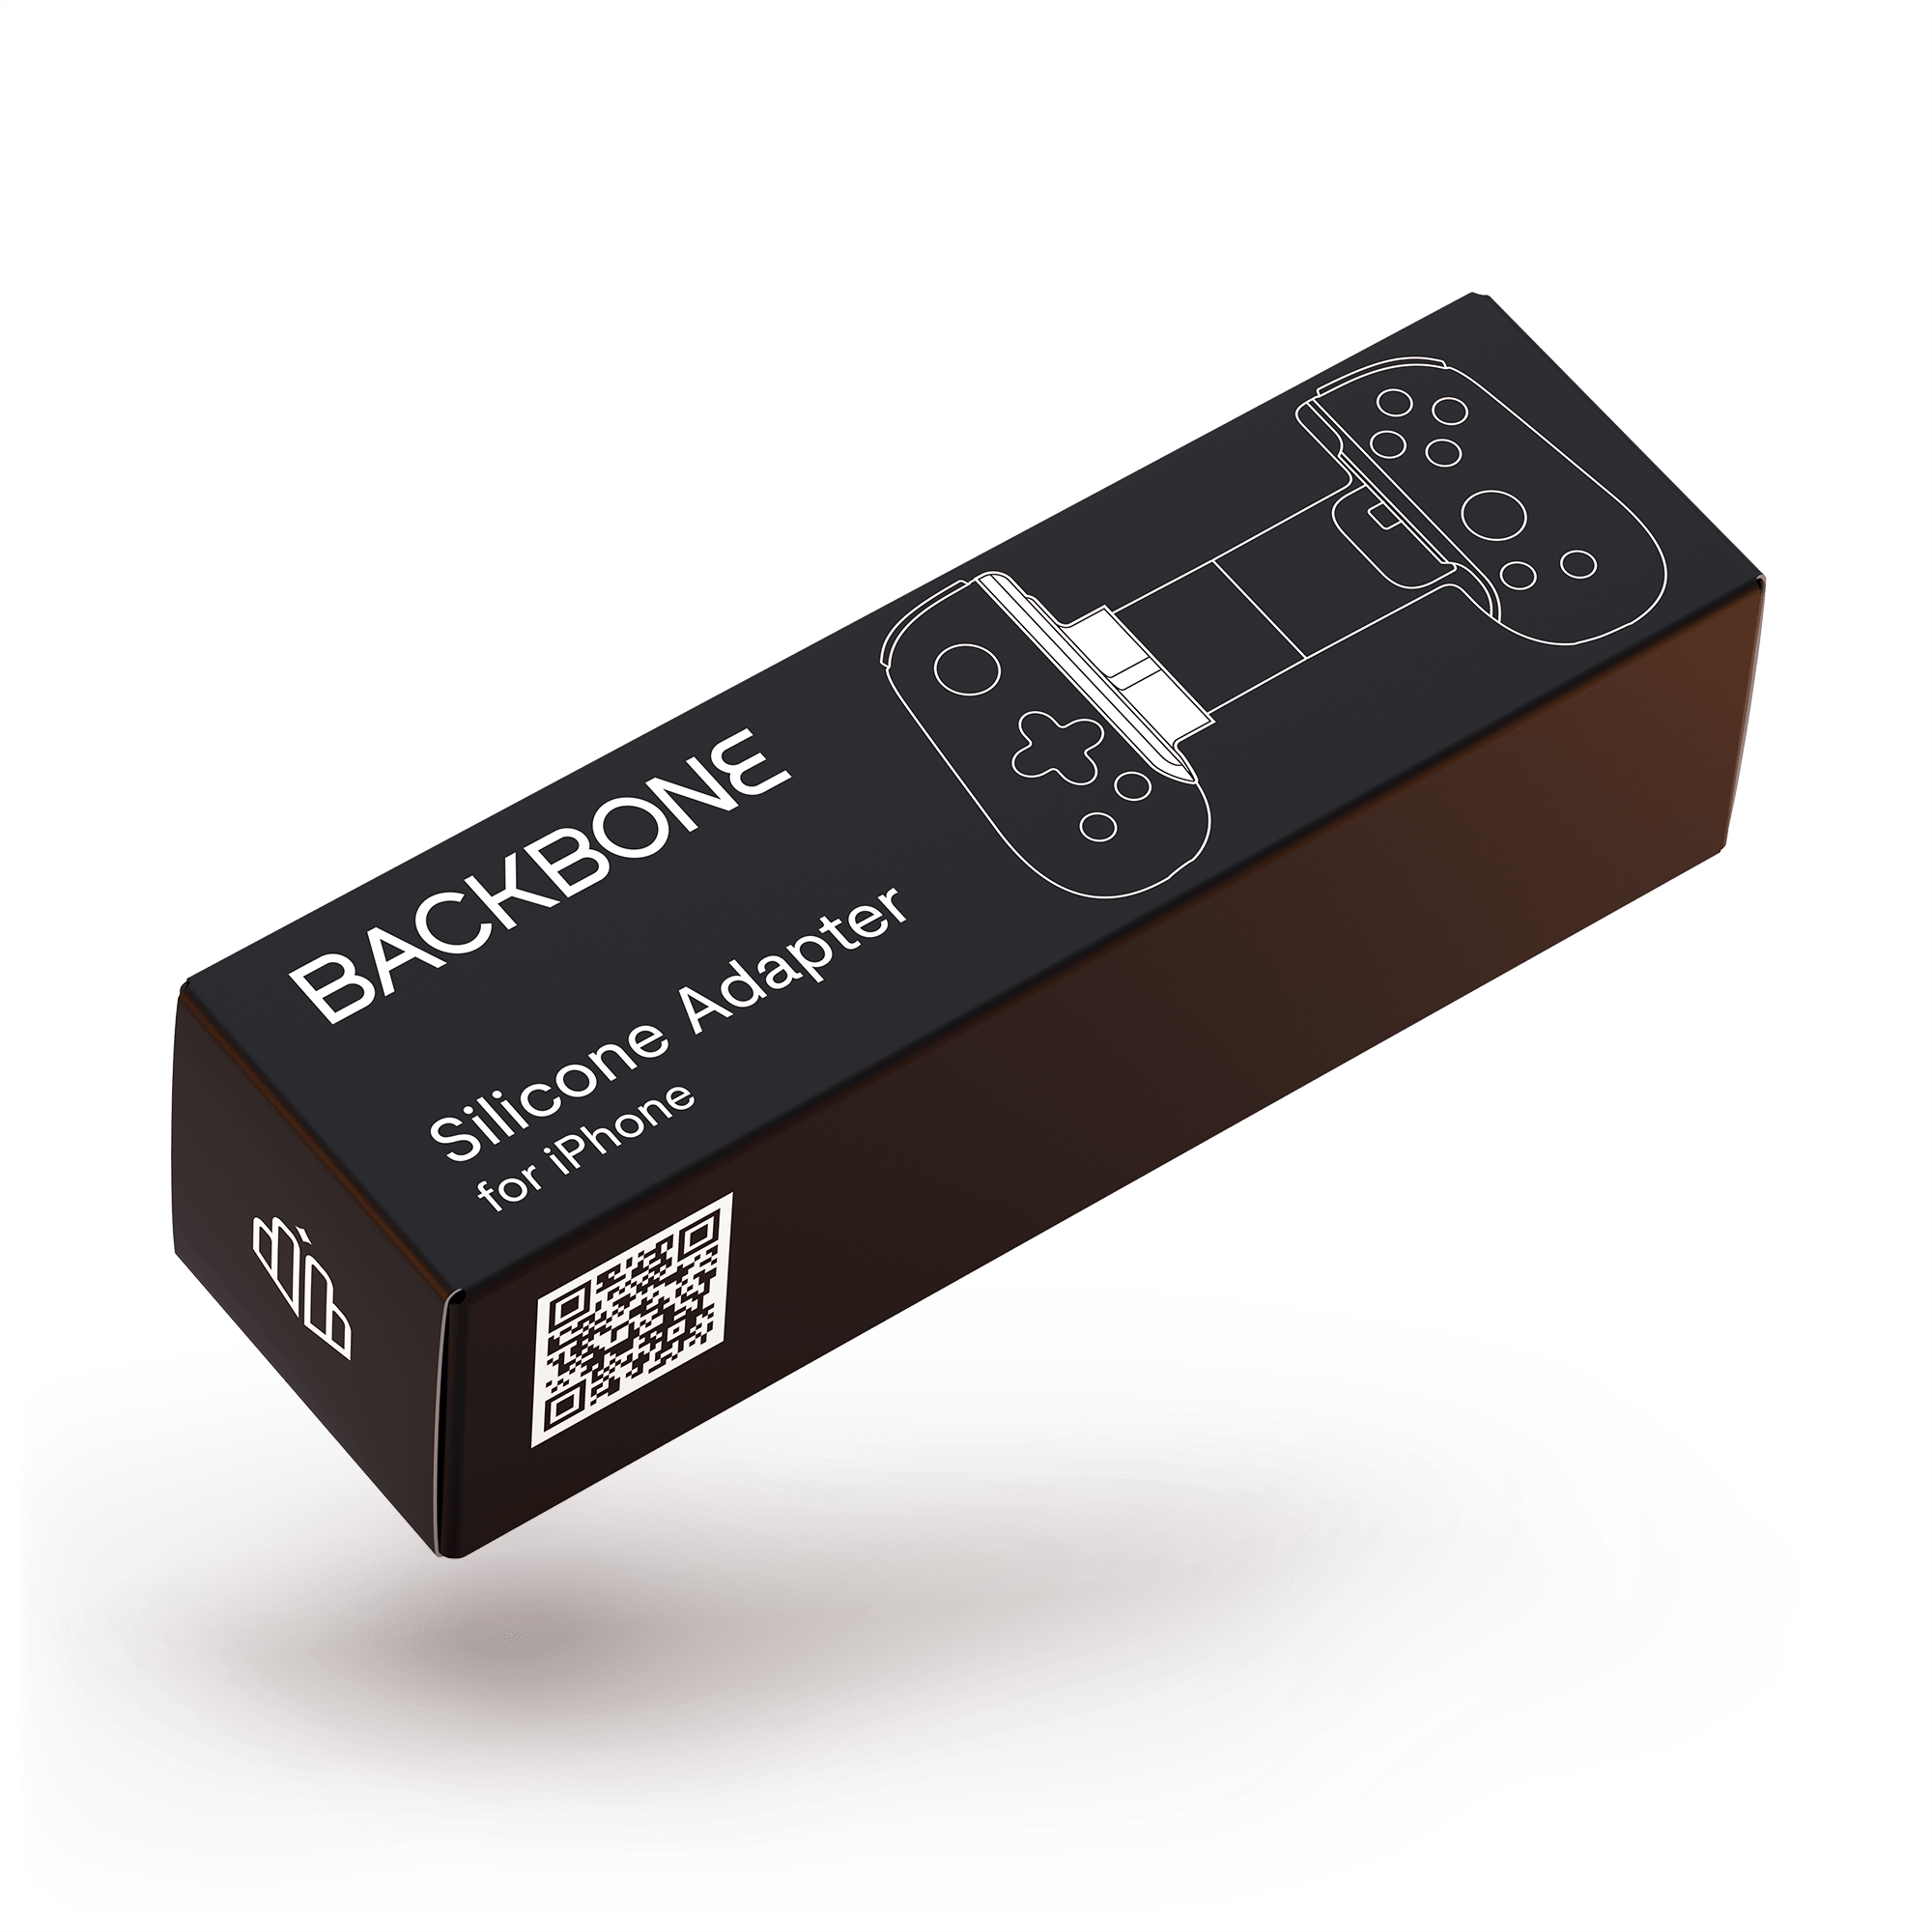 Backbone One iPhone Adapter packaging